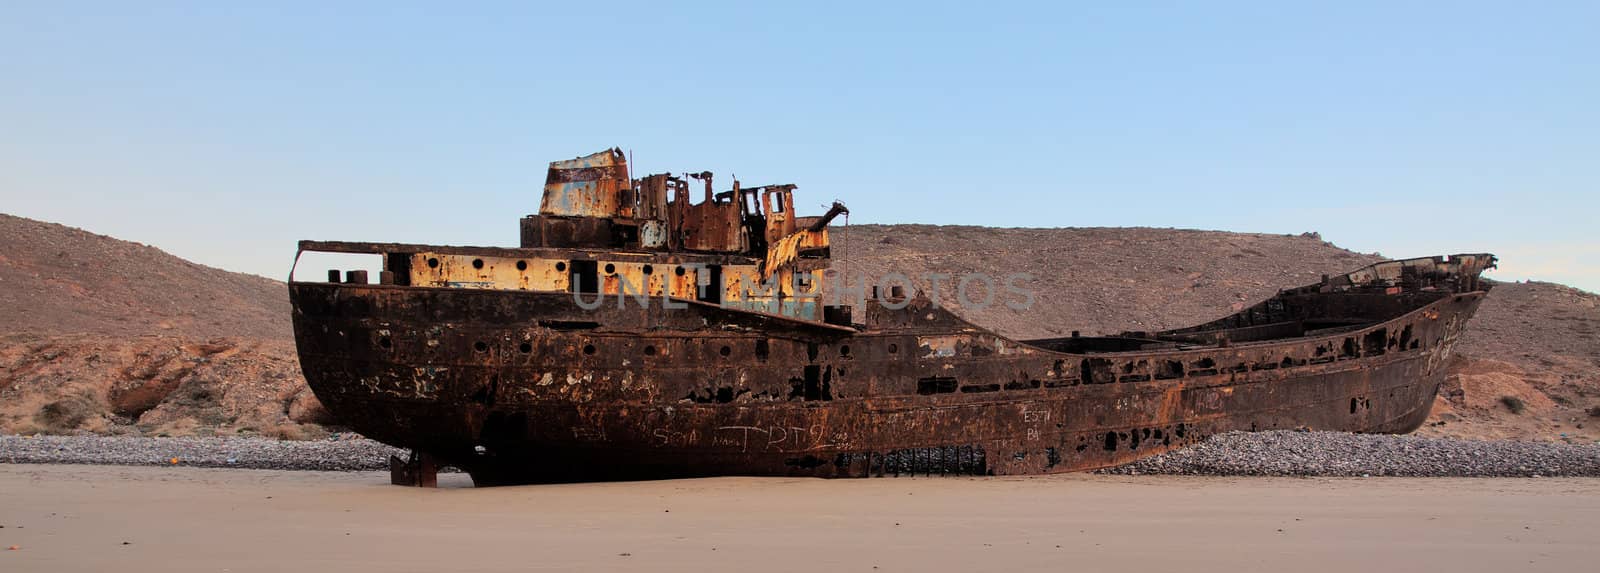 Shipwreck on the beach by michalpecek